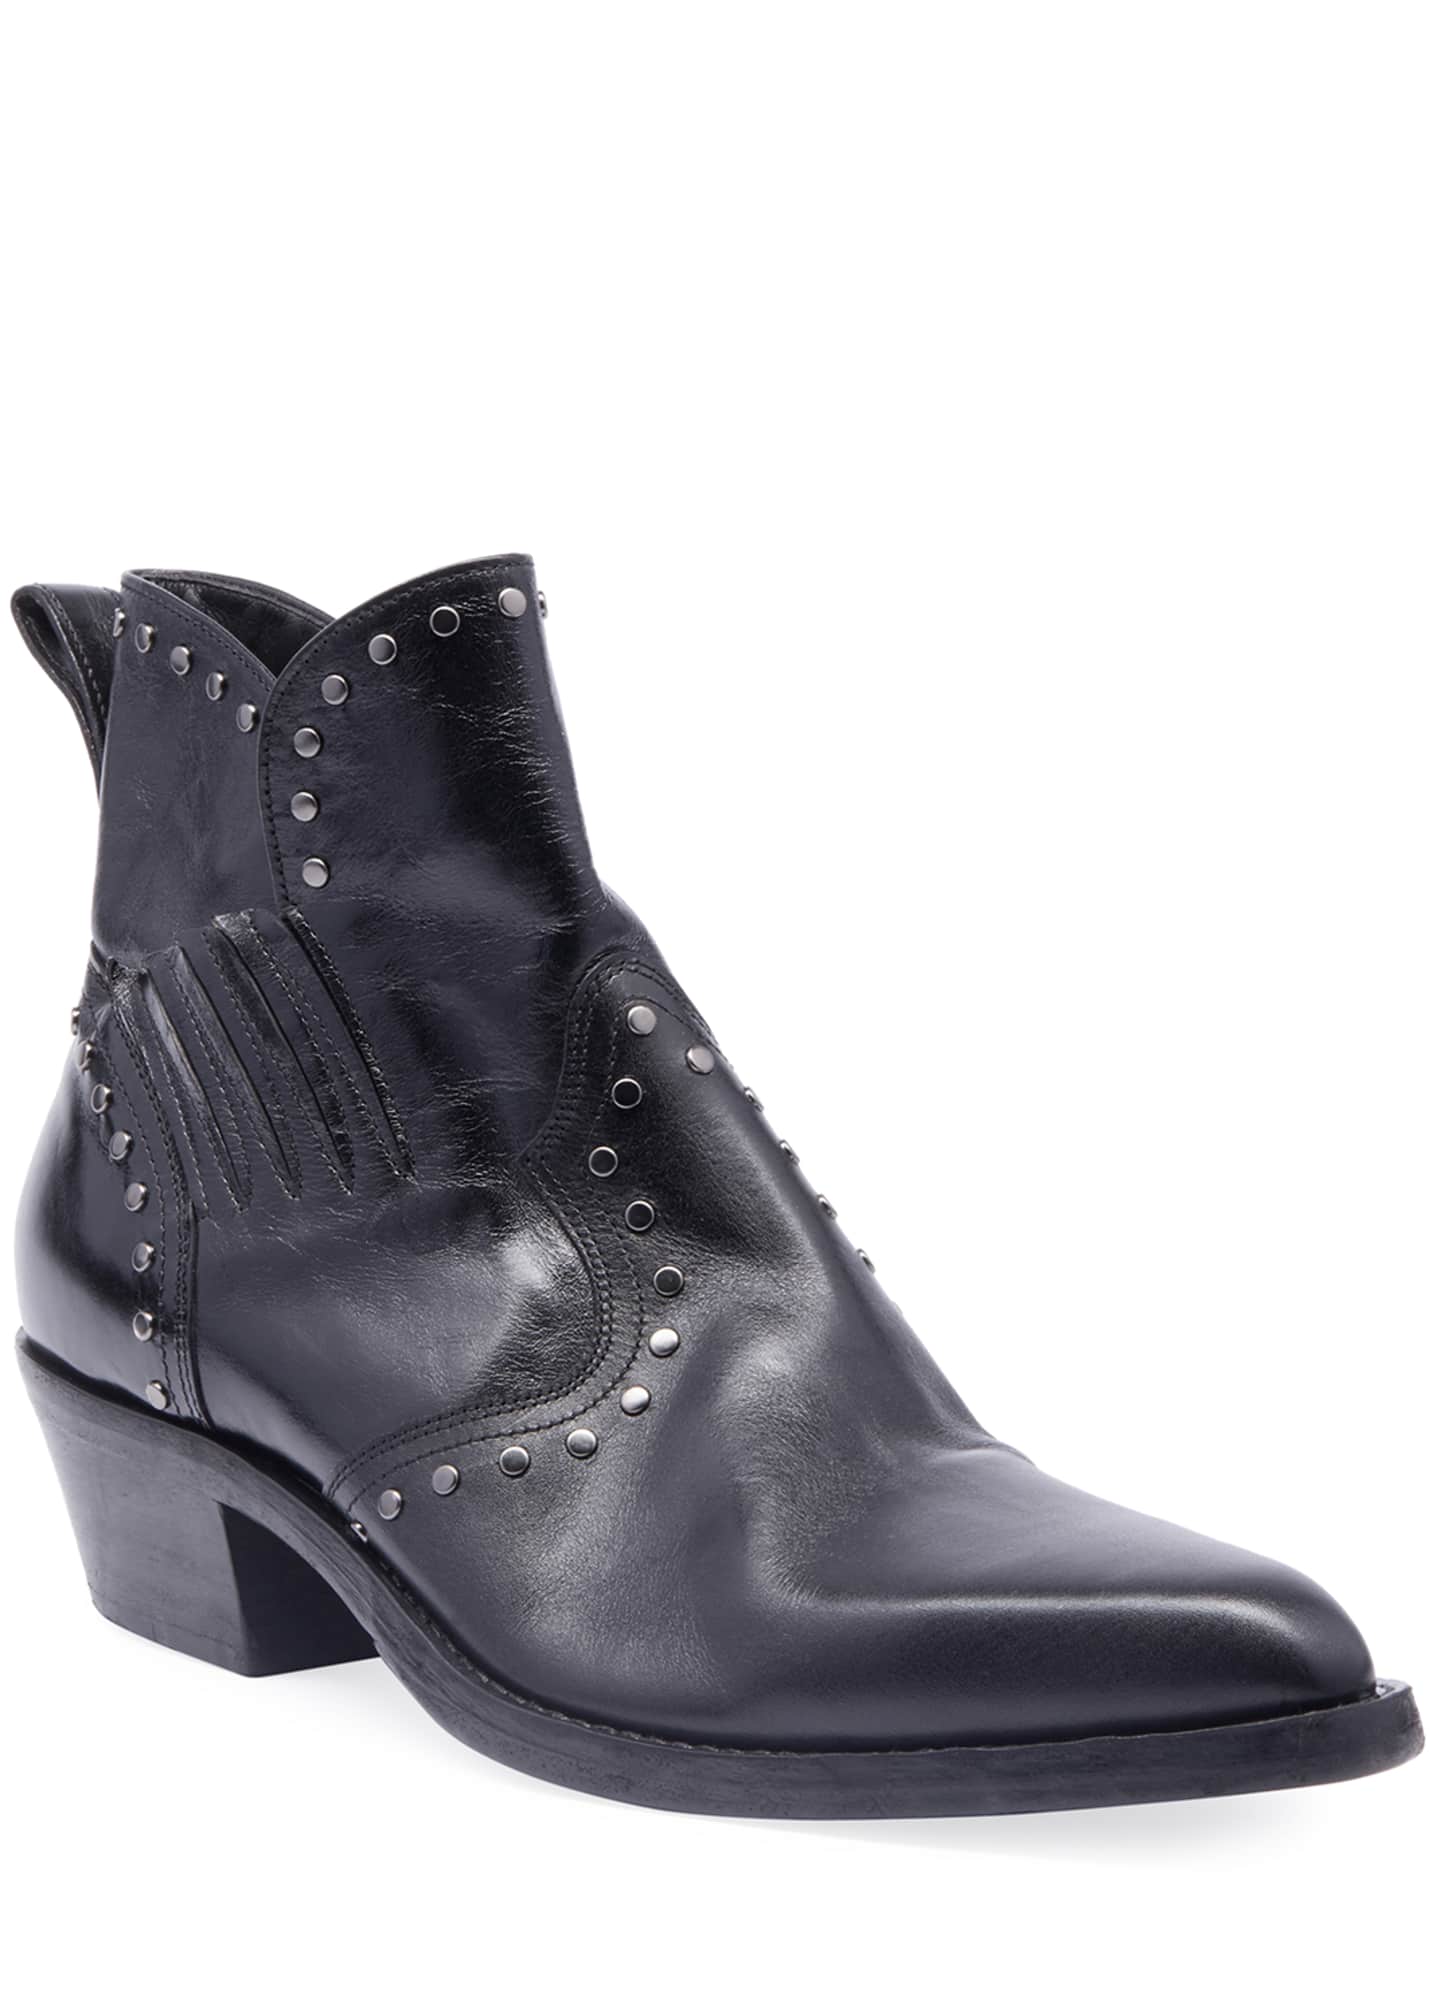 Saint Laurent Men's Dakota Studded Leather Boots - Bergdorf Goodman